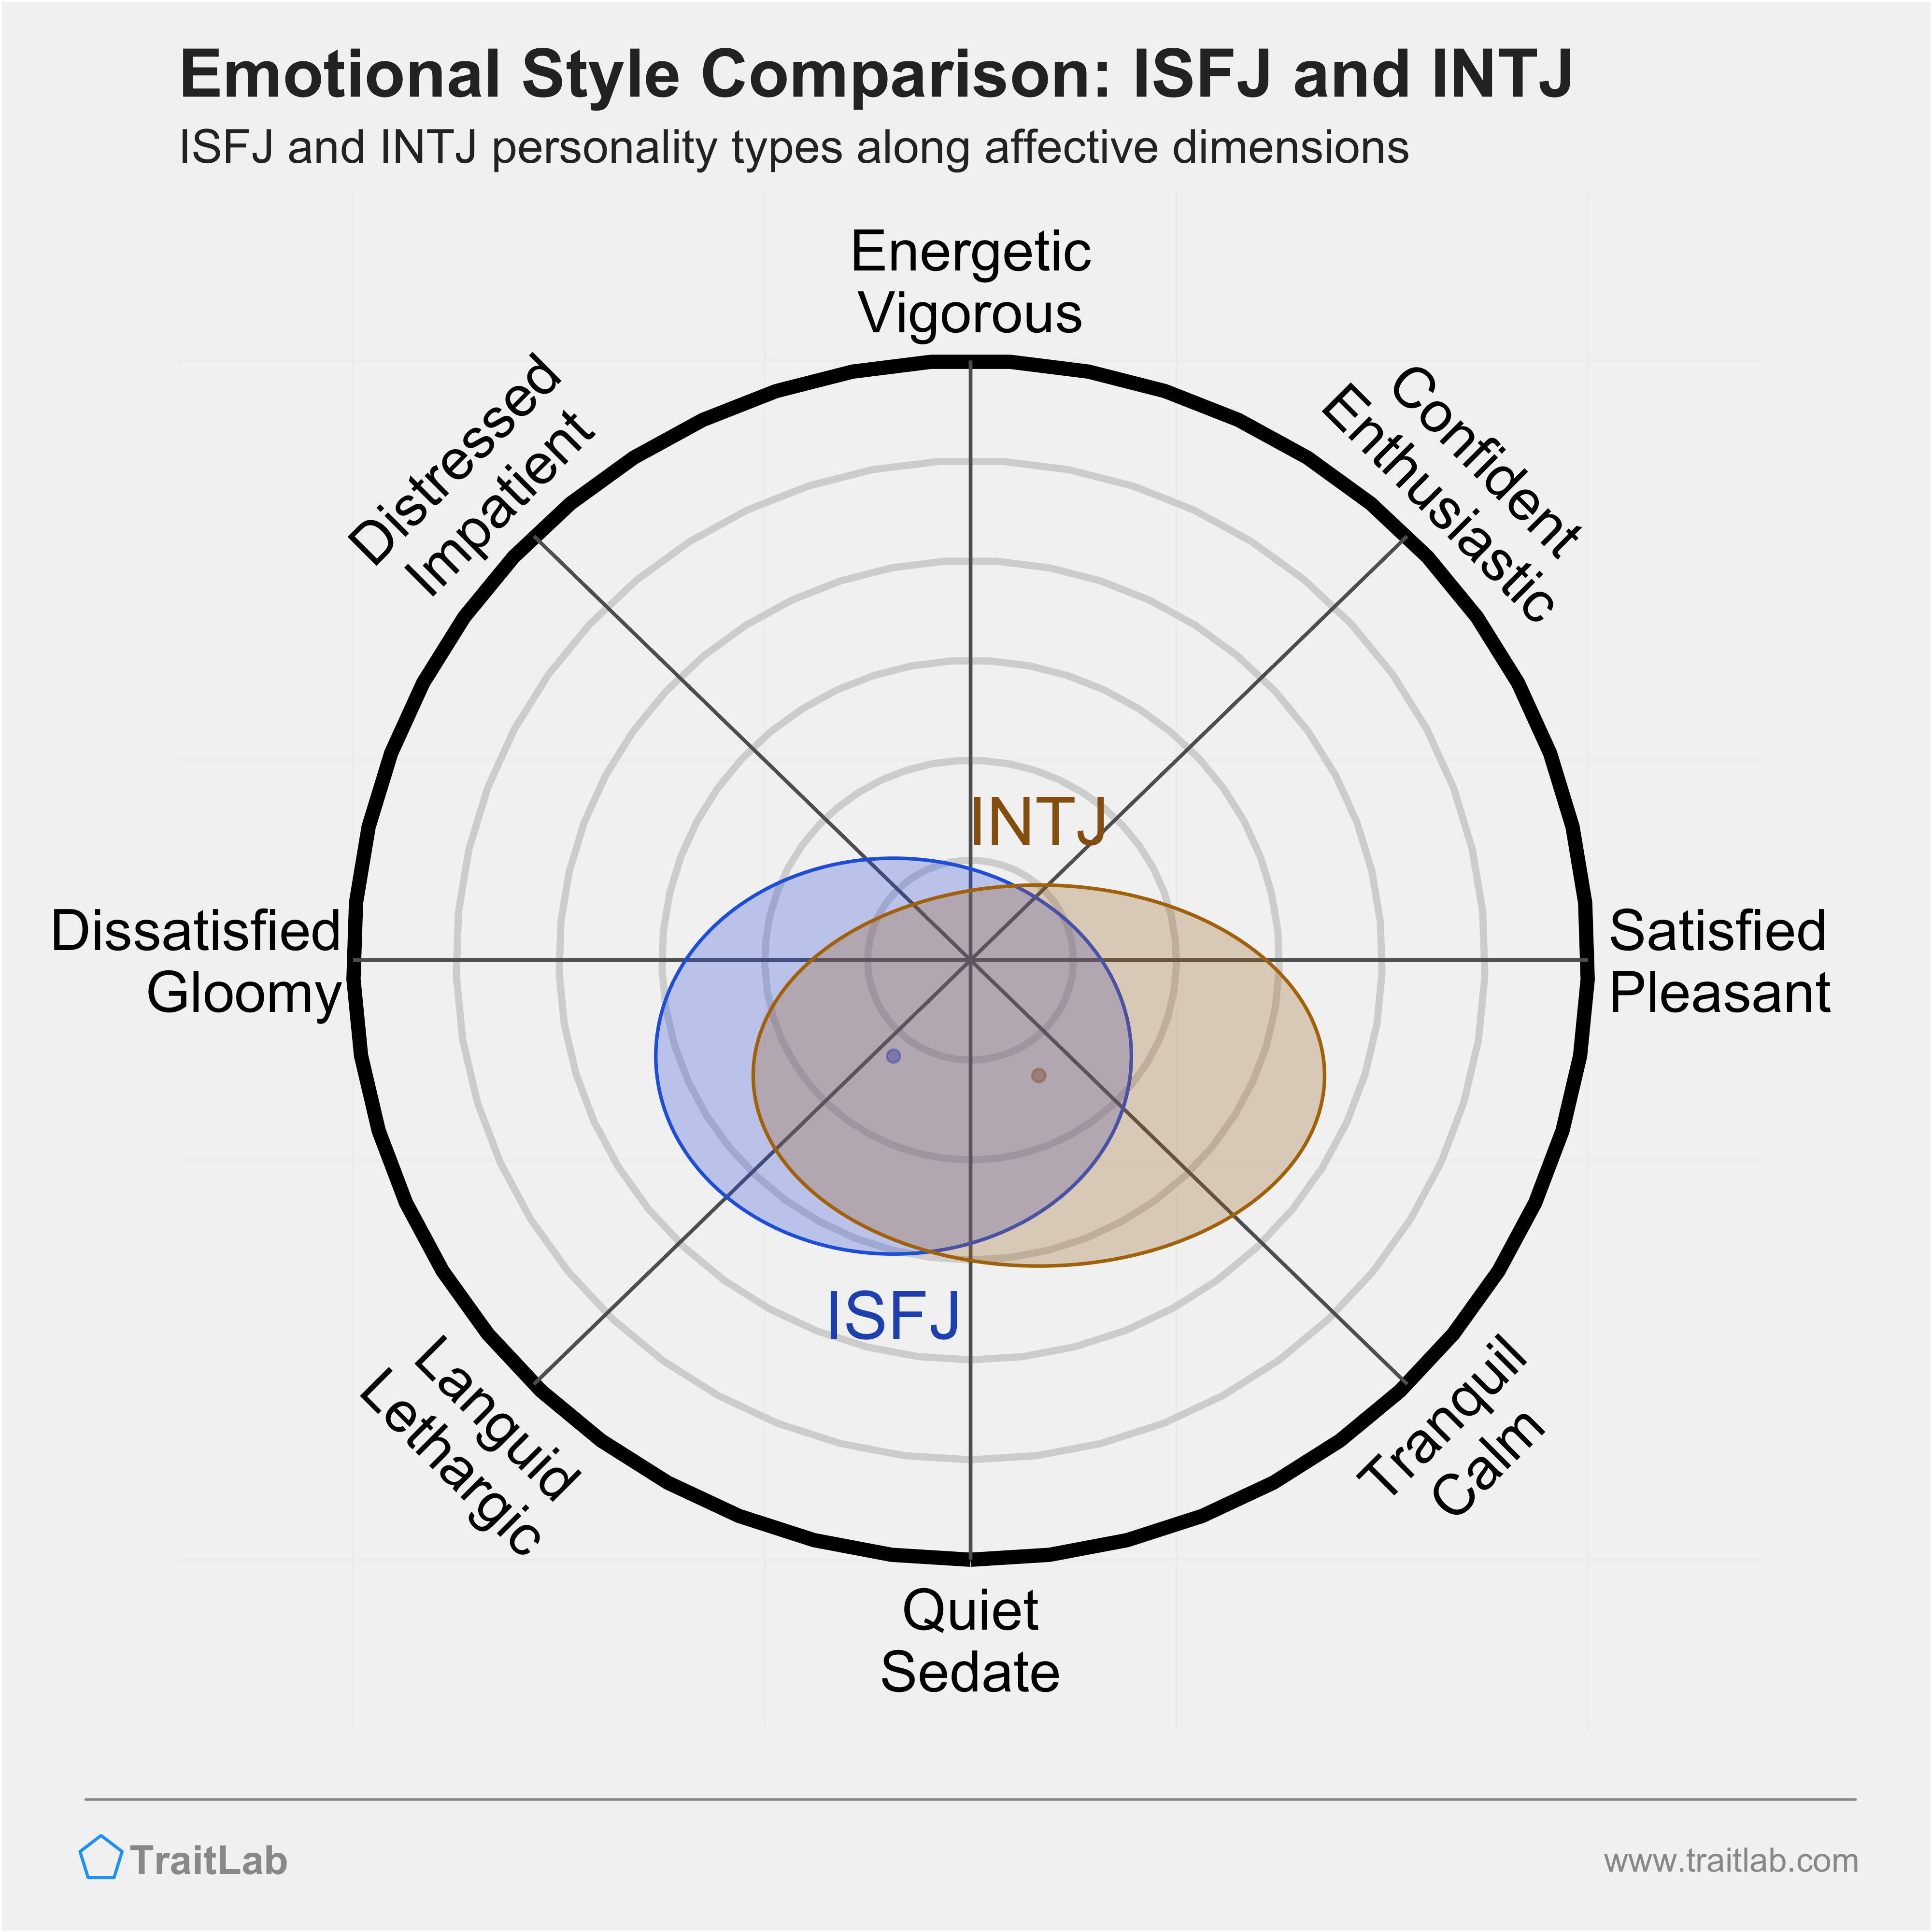 ISFJ and INTJ comparison across emotional (affective) dimensions